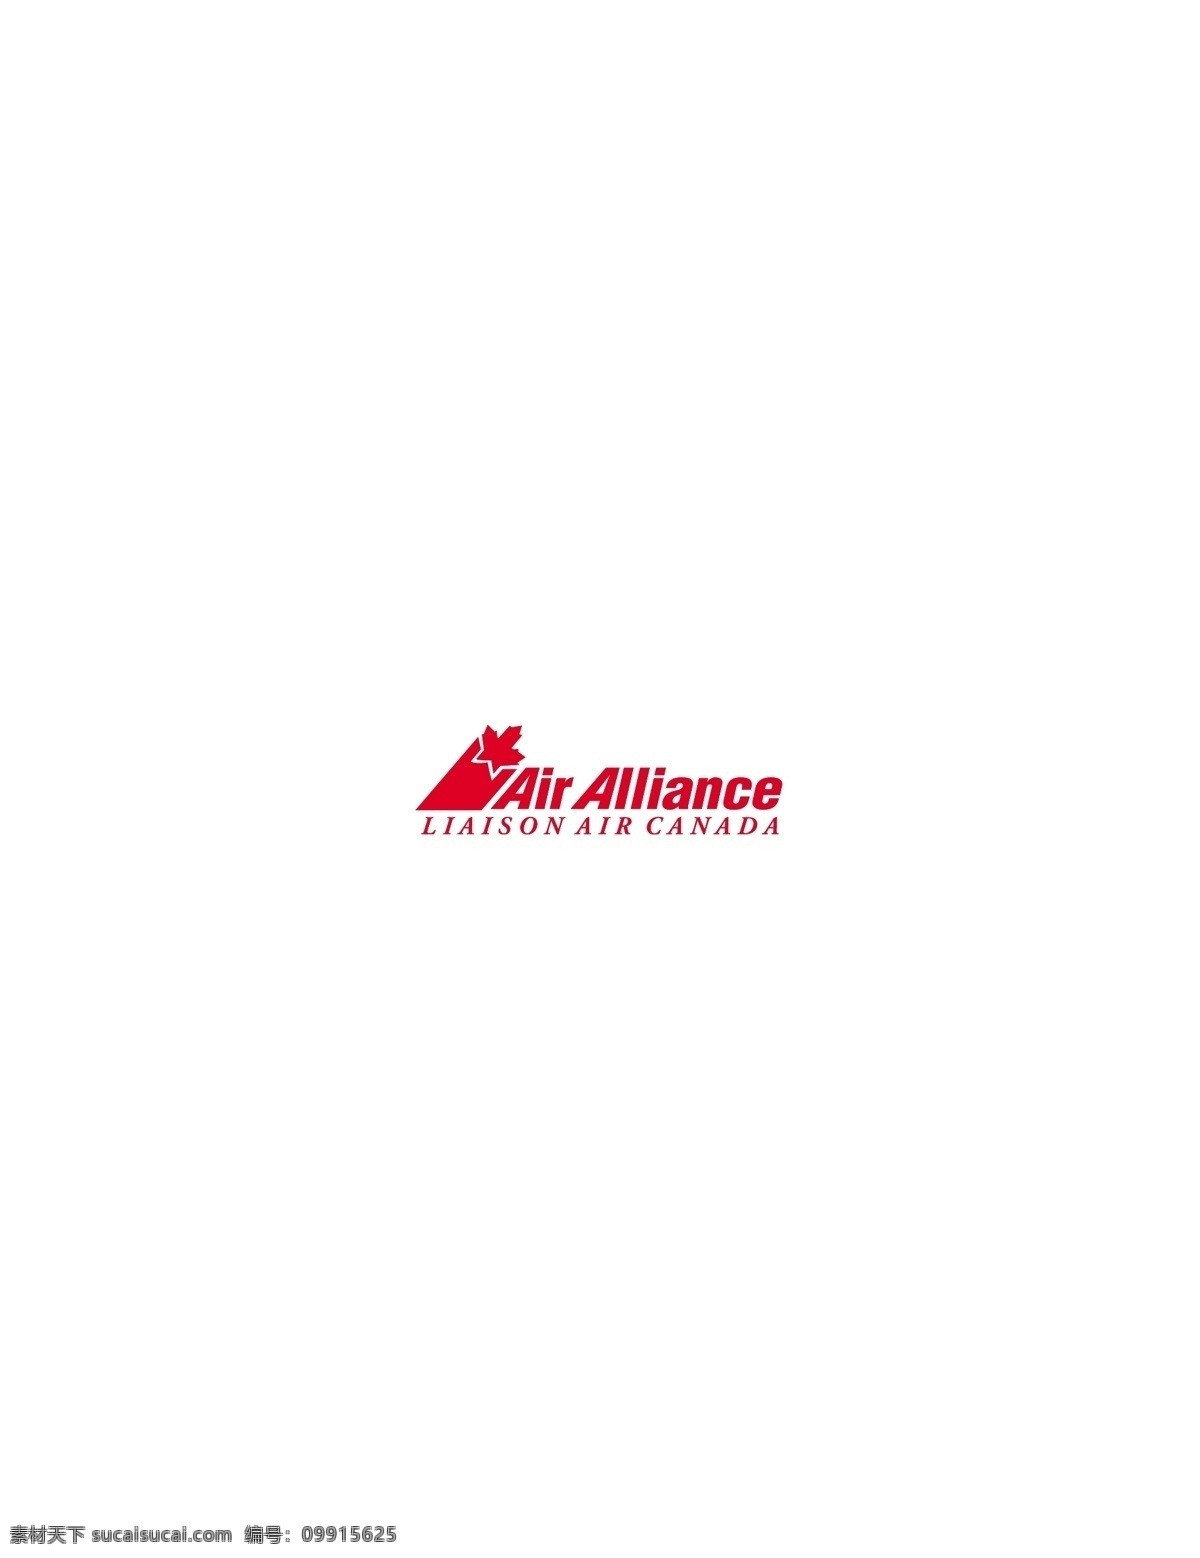 logo大全 logo 设计欣赏 商业矢量 矢量下载 airalliance 航空公司 标志 标志设计 欣赏 网页矢量 矢量图 其他矢量图